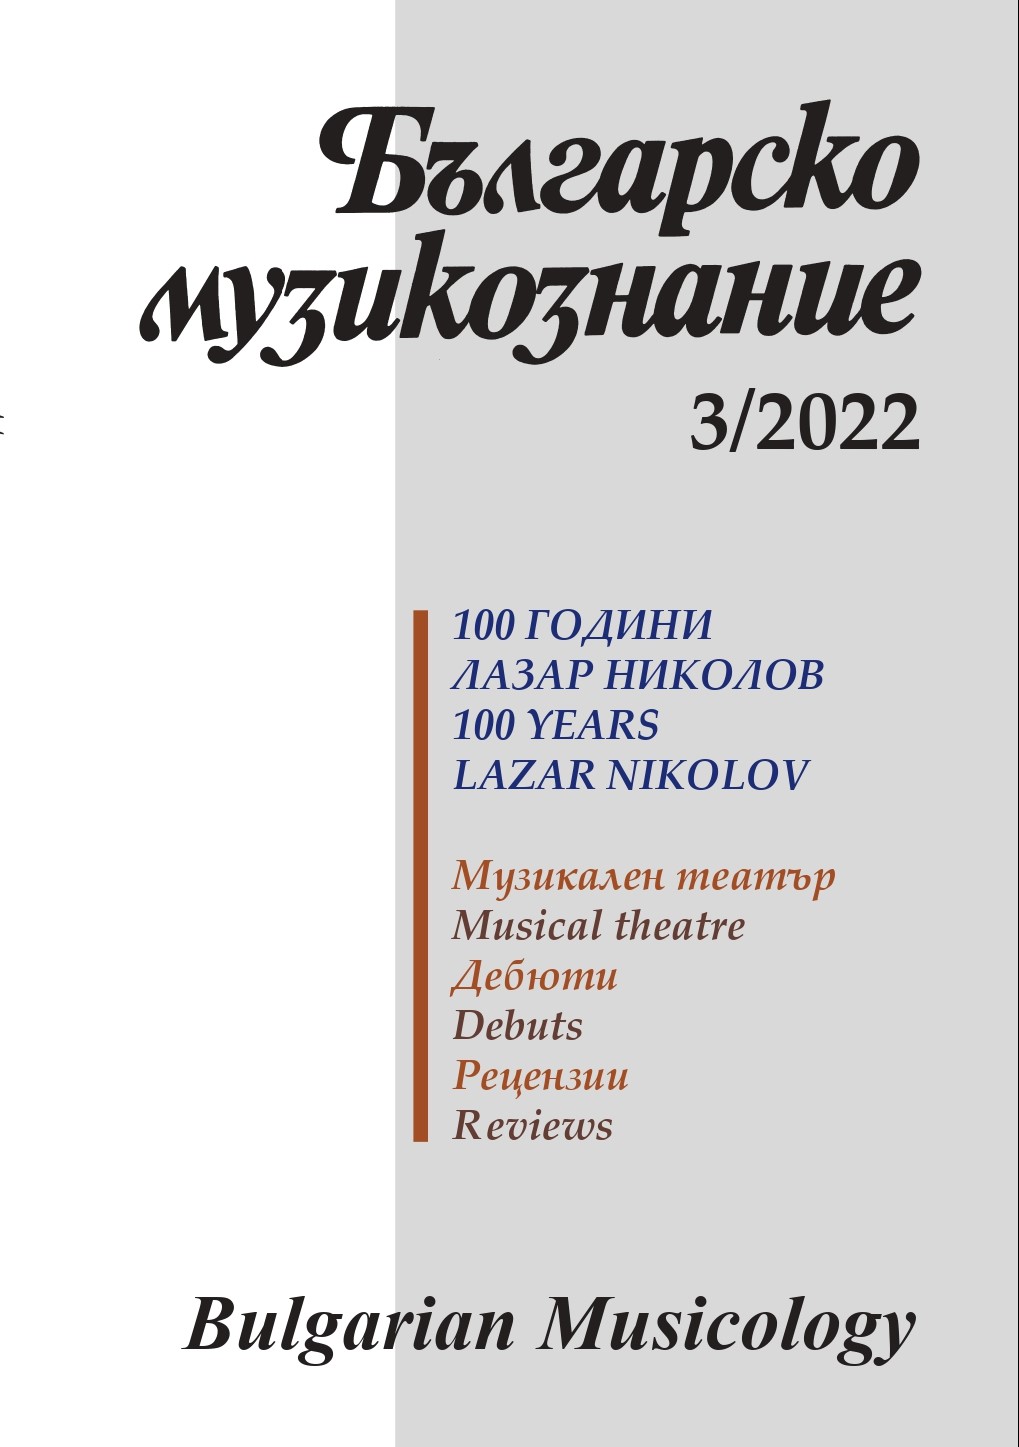 Polina Kujumdzhieva, Julian Kujumdzhiev: “German-Bulgarian Musical Dictionary. Bulgarian-German Musical Dictionary” Cover Image